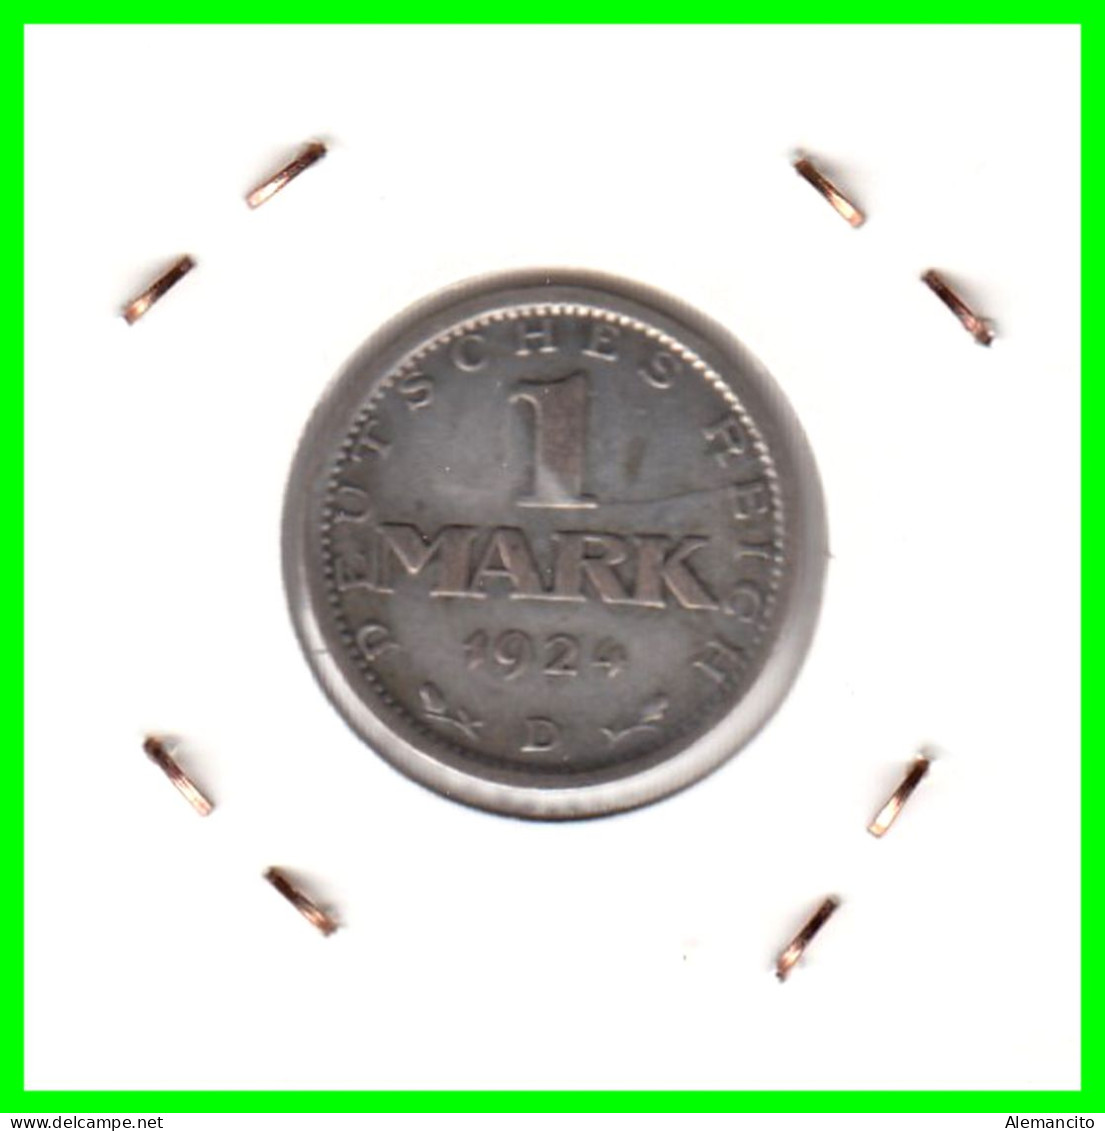 GERMANY REPÚBLICA DE WEIMAR 1 MARK ( 1924 CECA - D )  ( REICHSMARK KM # 42 ) - 1 Mark & 1 Reichsmark